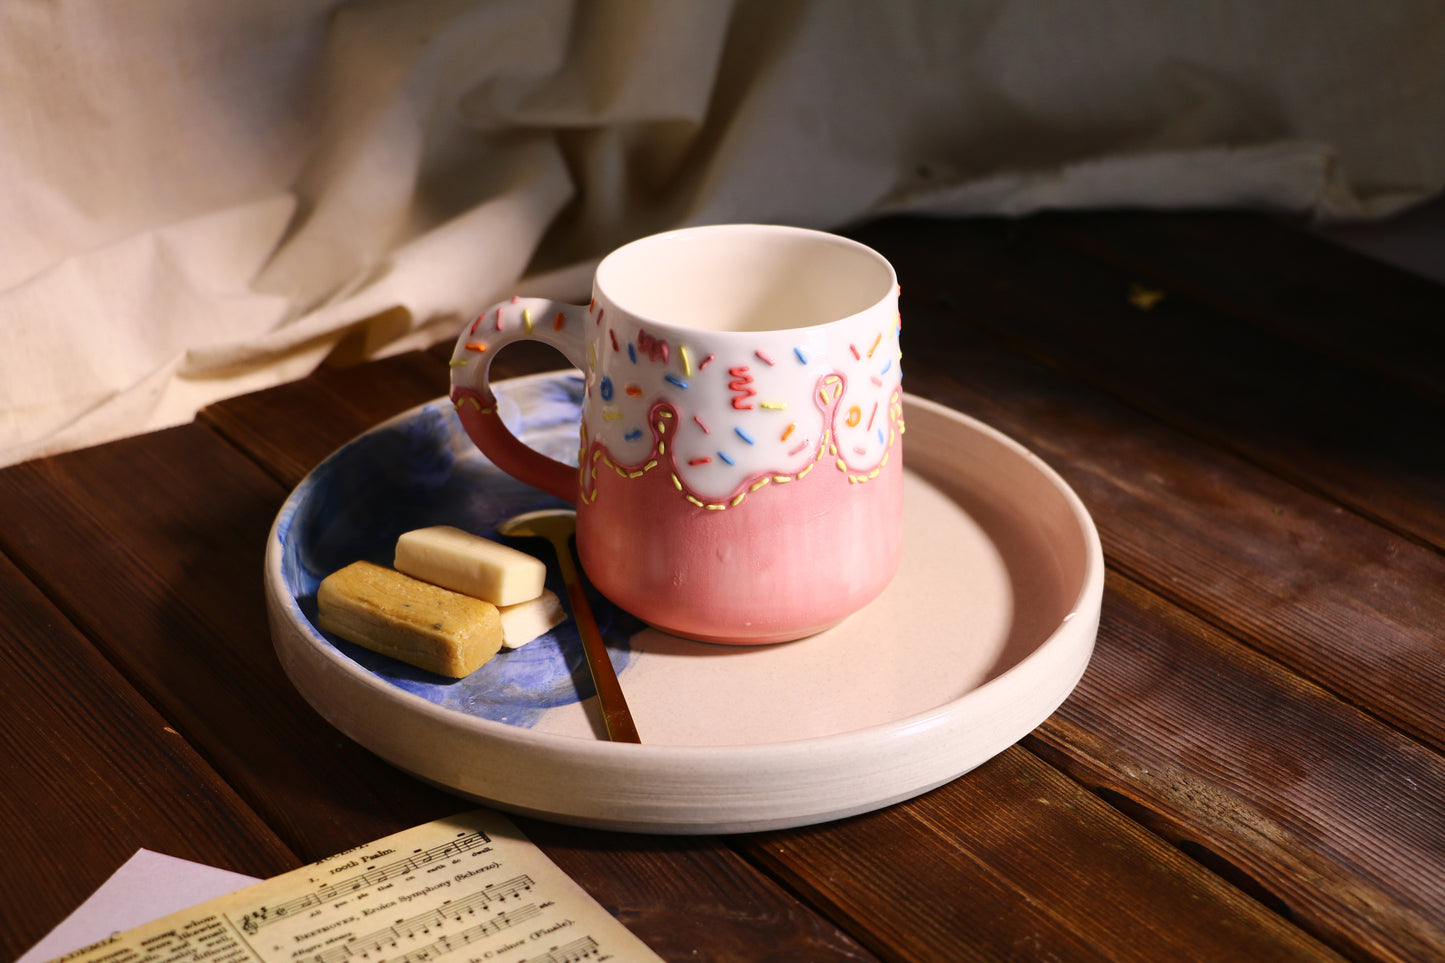 Ice-cream Ceramic Coffee Mug, Personalized Handmade Pottery Mug for Gifts